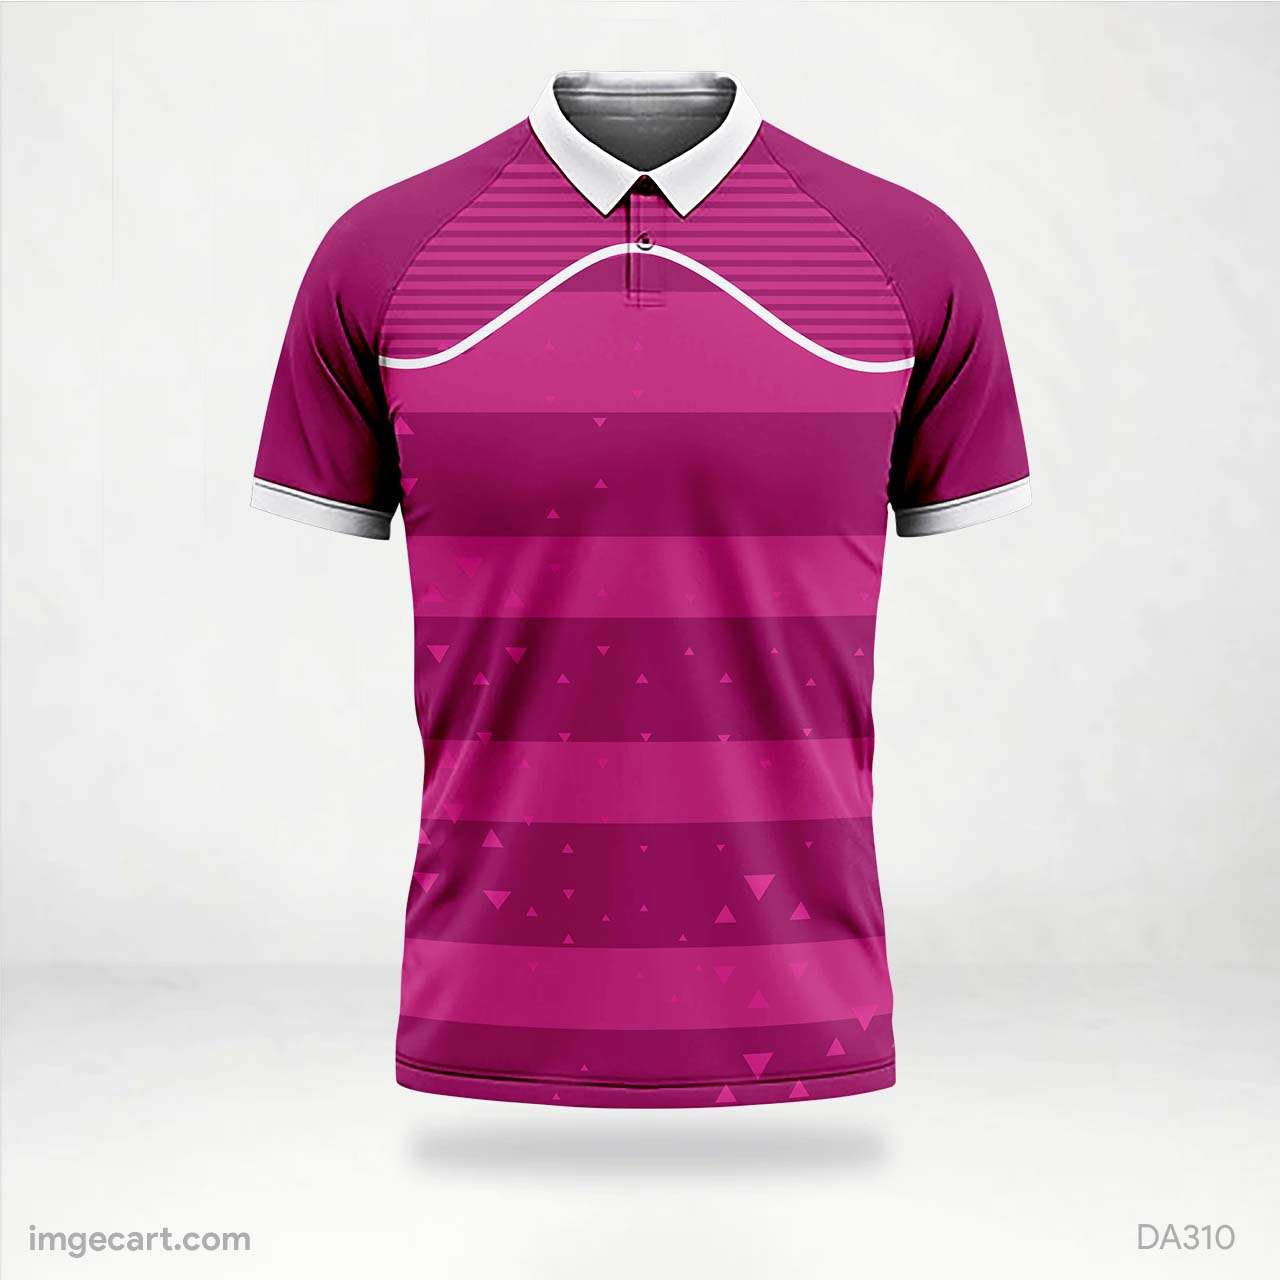 Cricket Jersey Design pink with pattern - imgecart